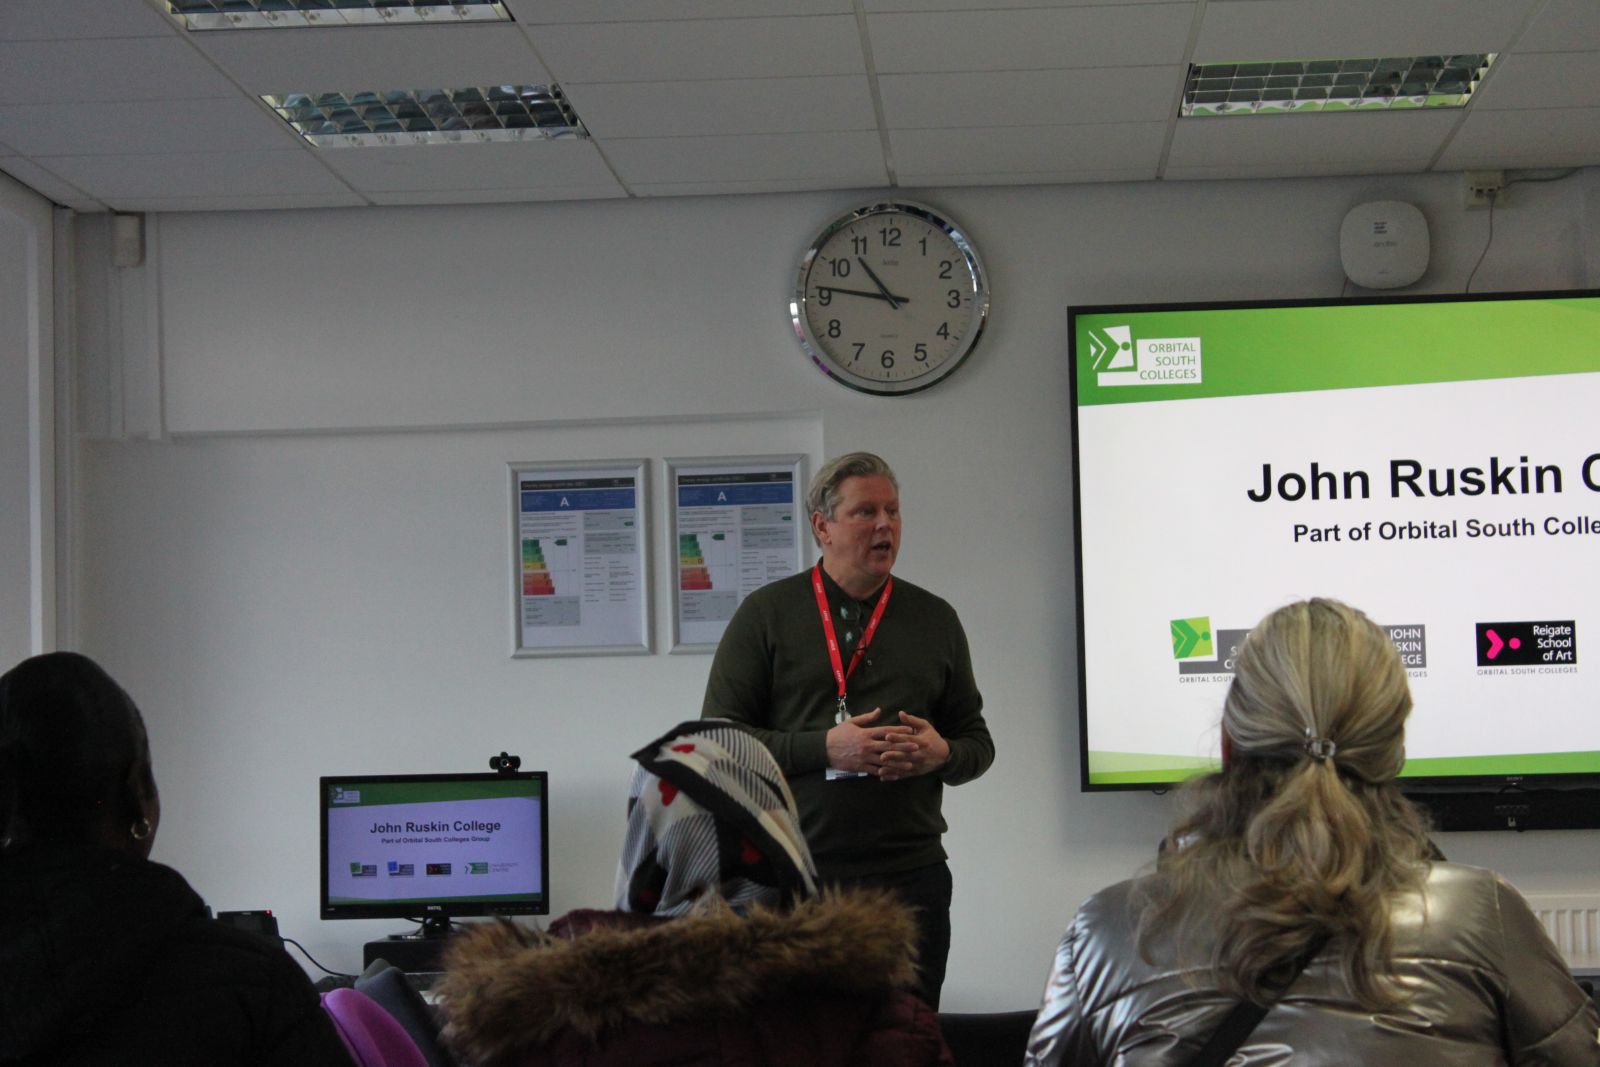 David Rabjons, presenting to the learners in the boardroom